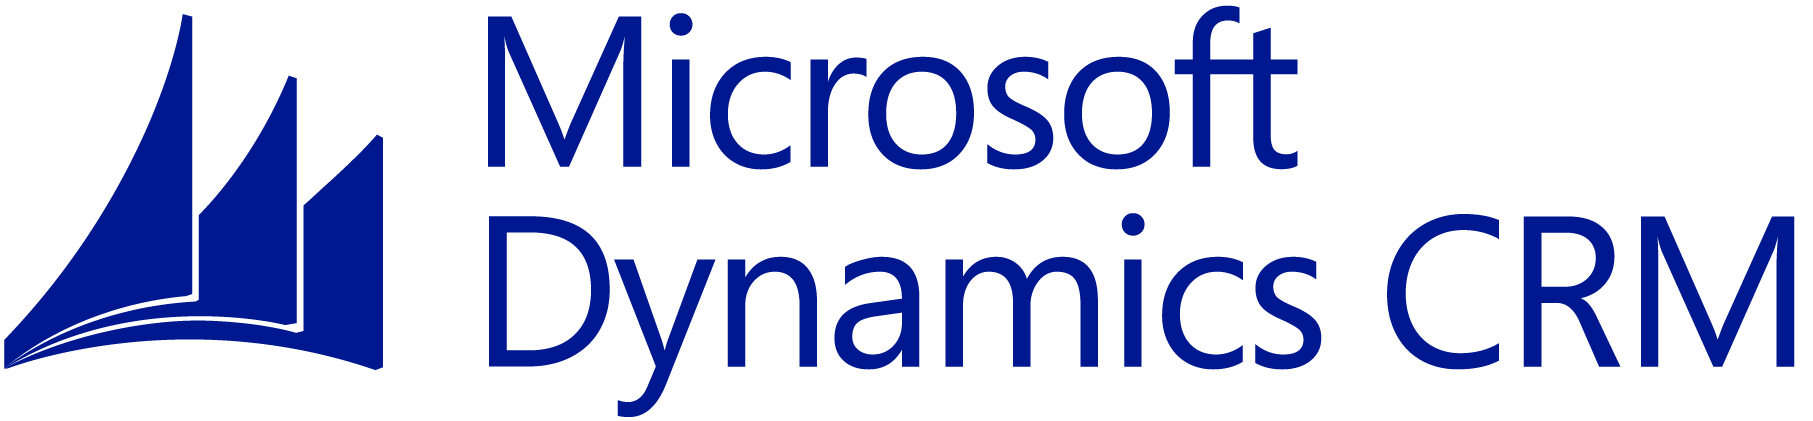 Dynamics CRM Online Logo - Microsoft Dynamics CRM 2011 Update Rollup 16 - Dynamics Consulting ...